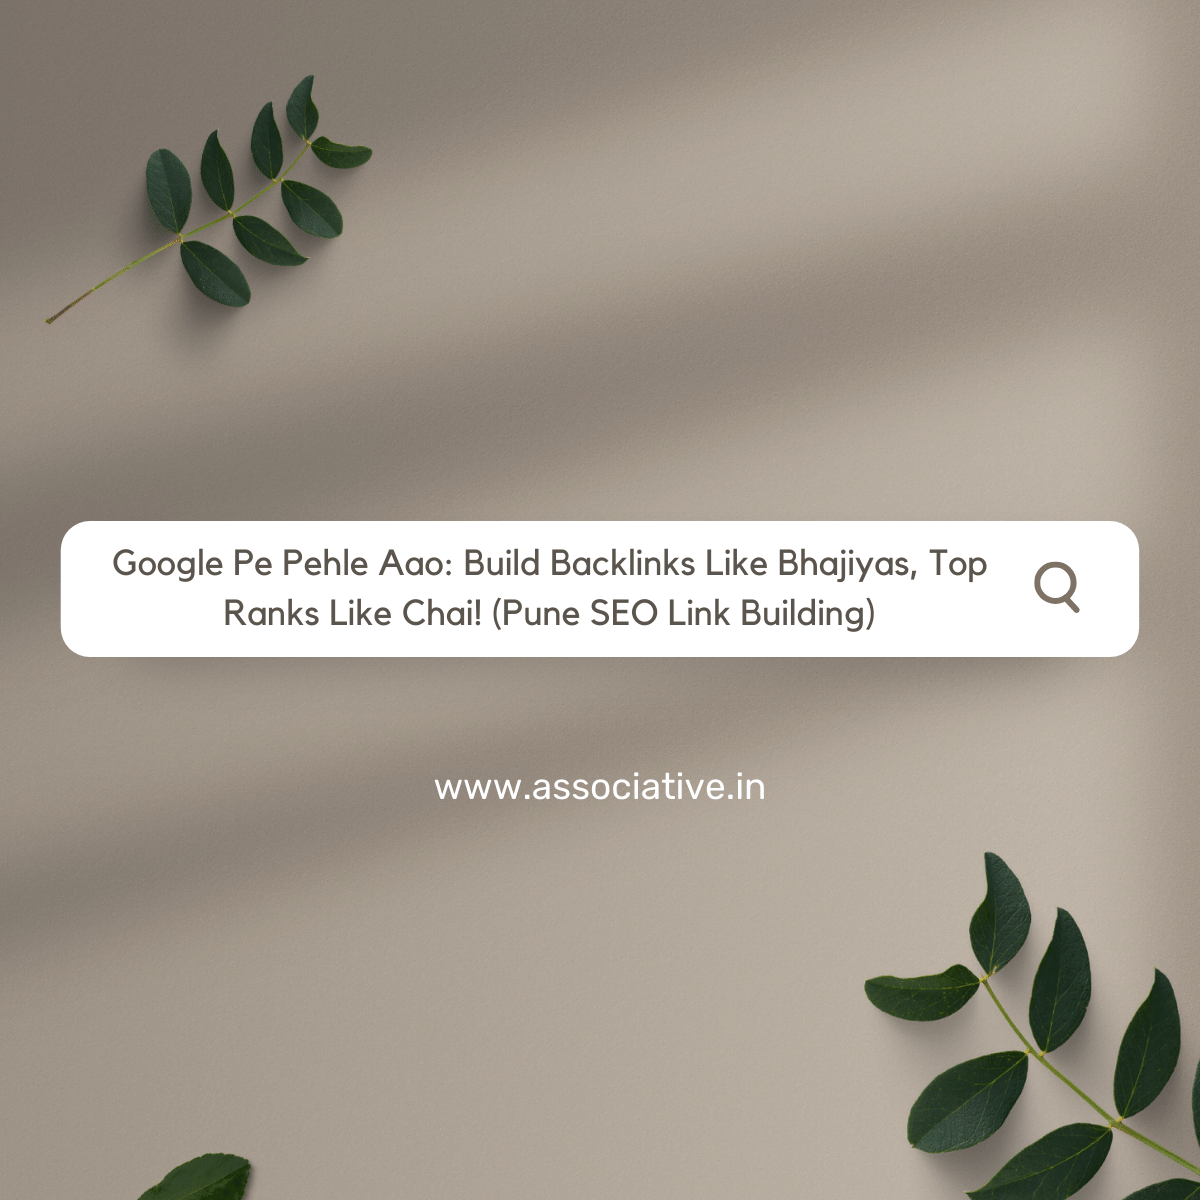 Google Pe Pehle Aao: Build Backlinks Like Bhajiyas, Top Ranks Like Chai! (Pune SEO Link Building)